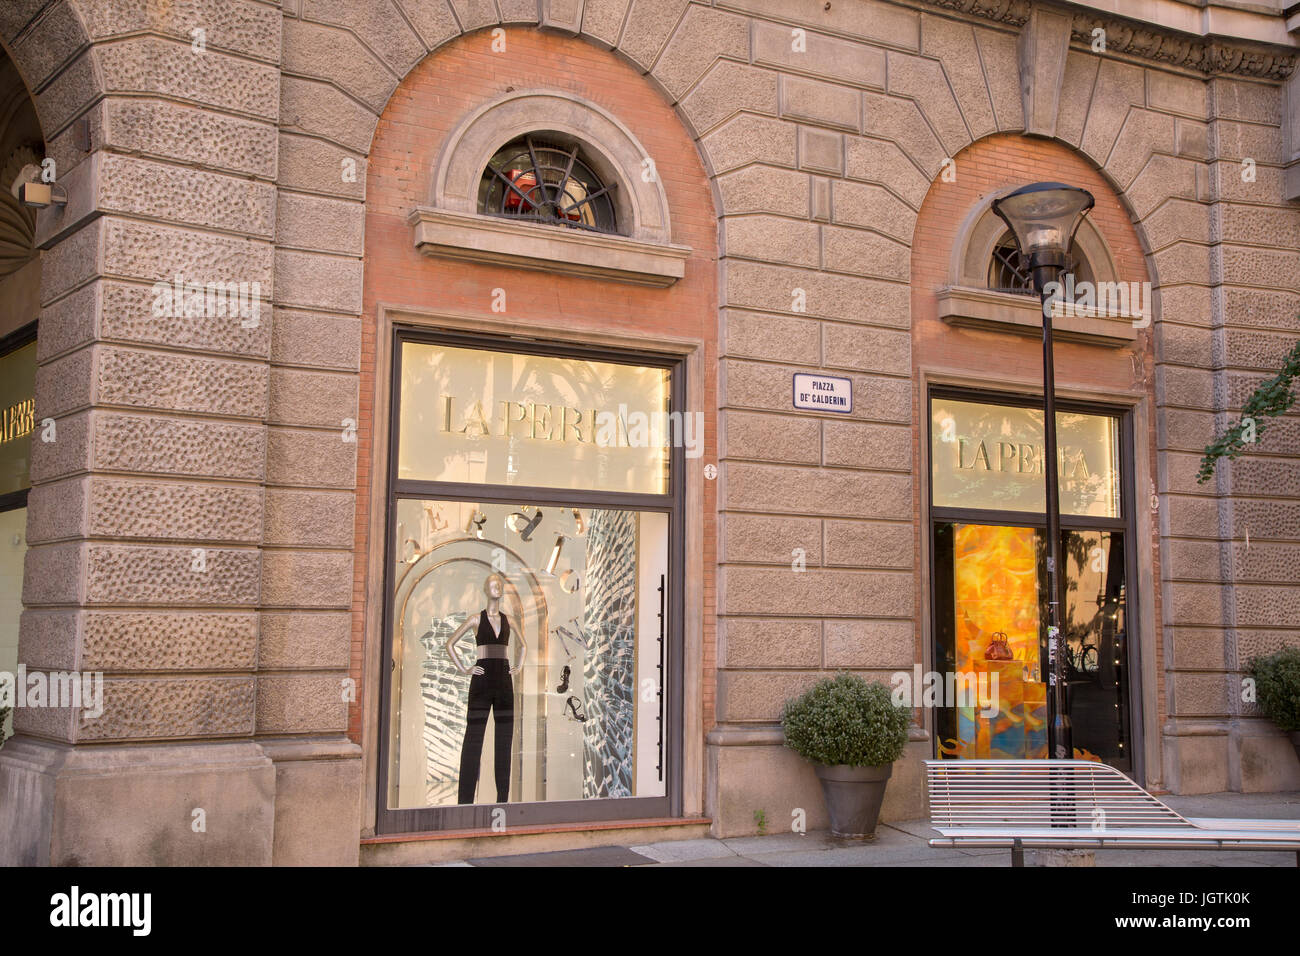 La Perla Clothes Shop, Farini Street, Bologna, Italy Stock Photo - Alamy